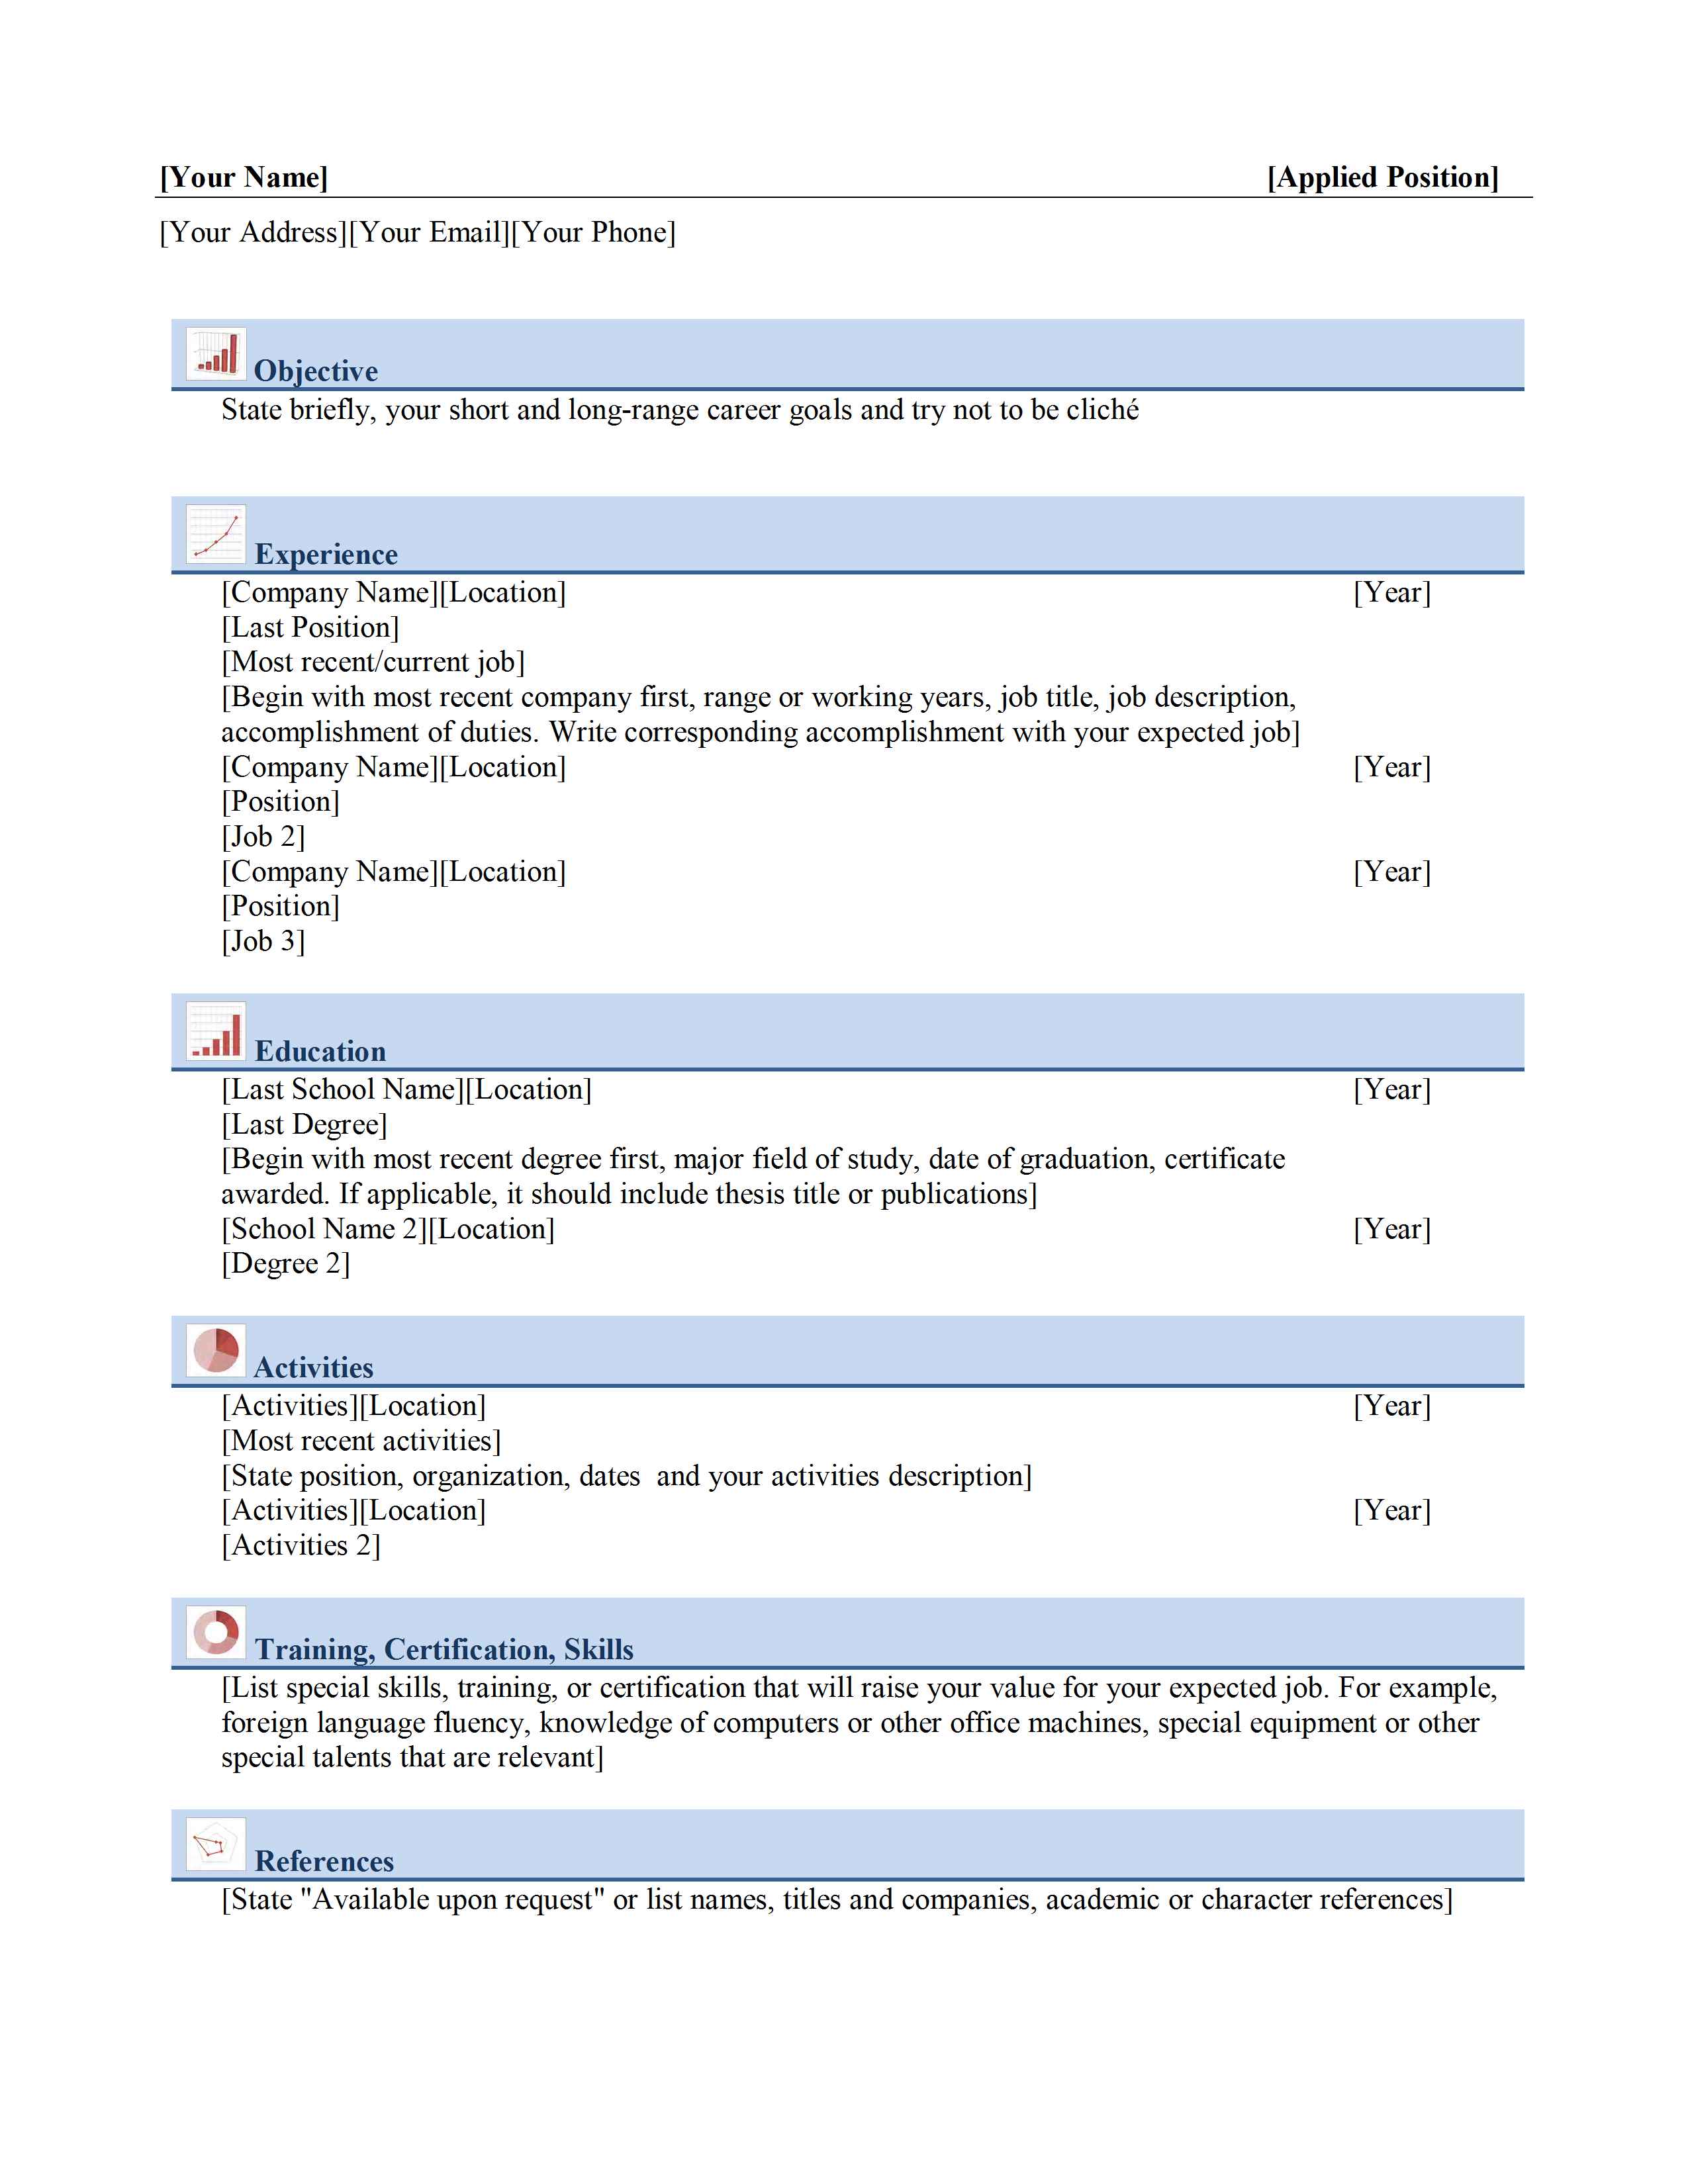 sales resume templates